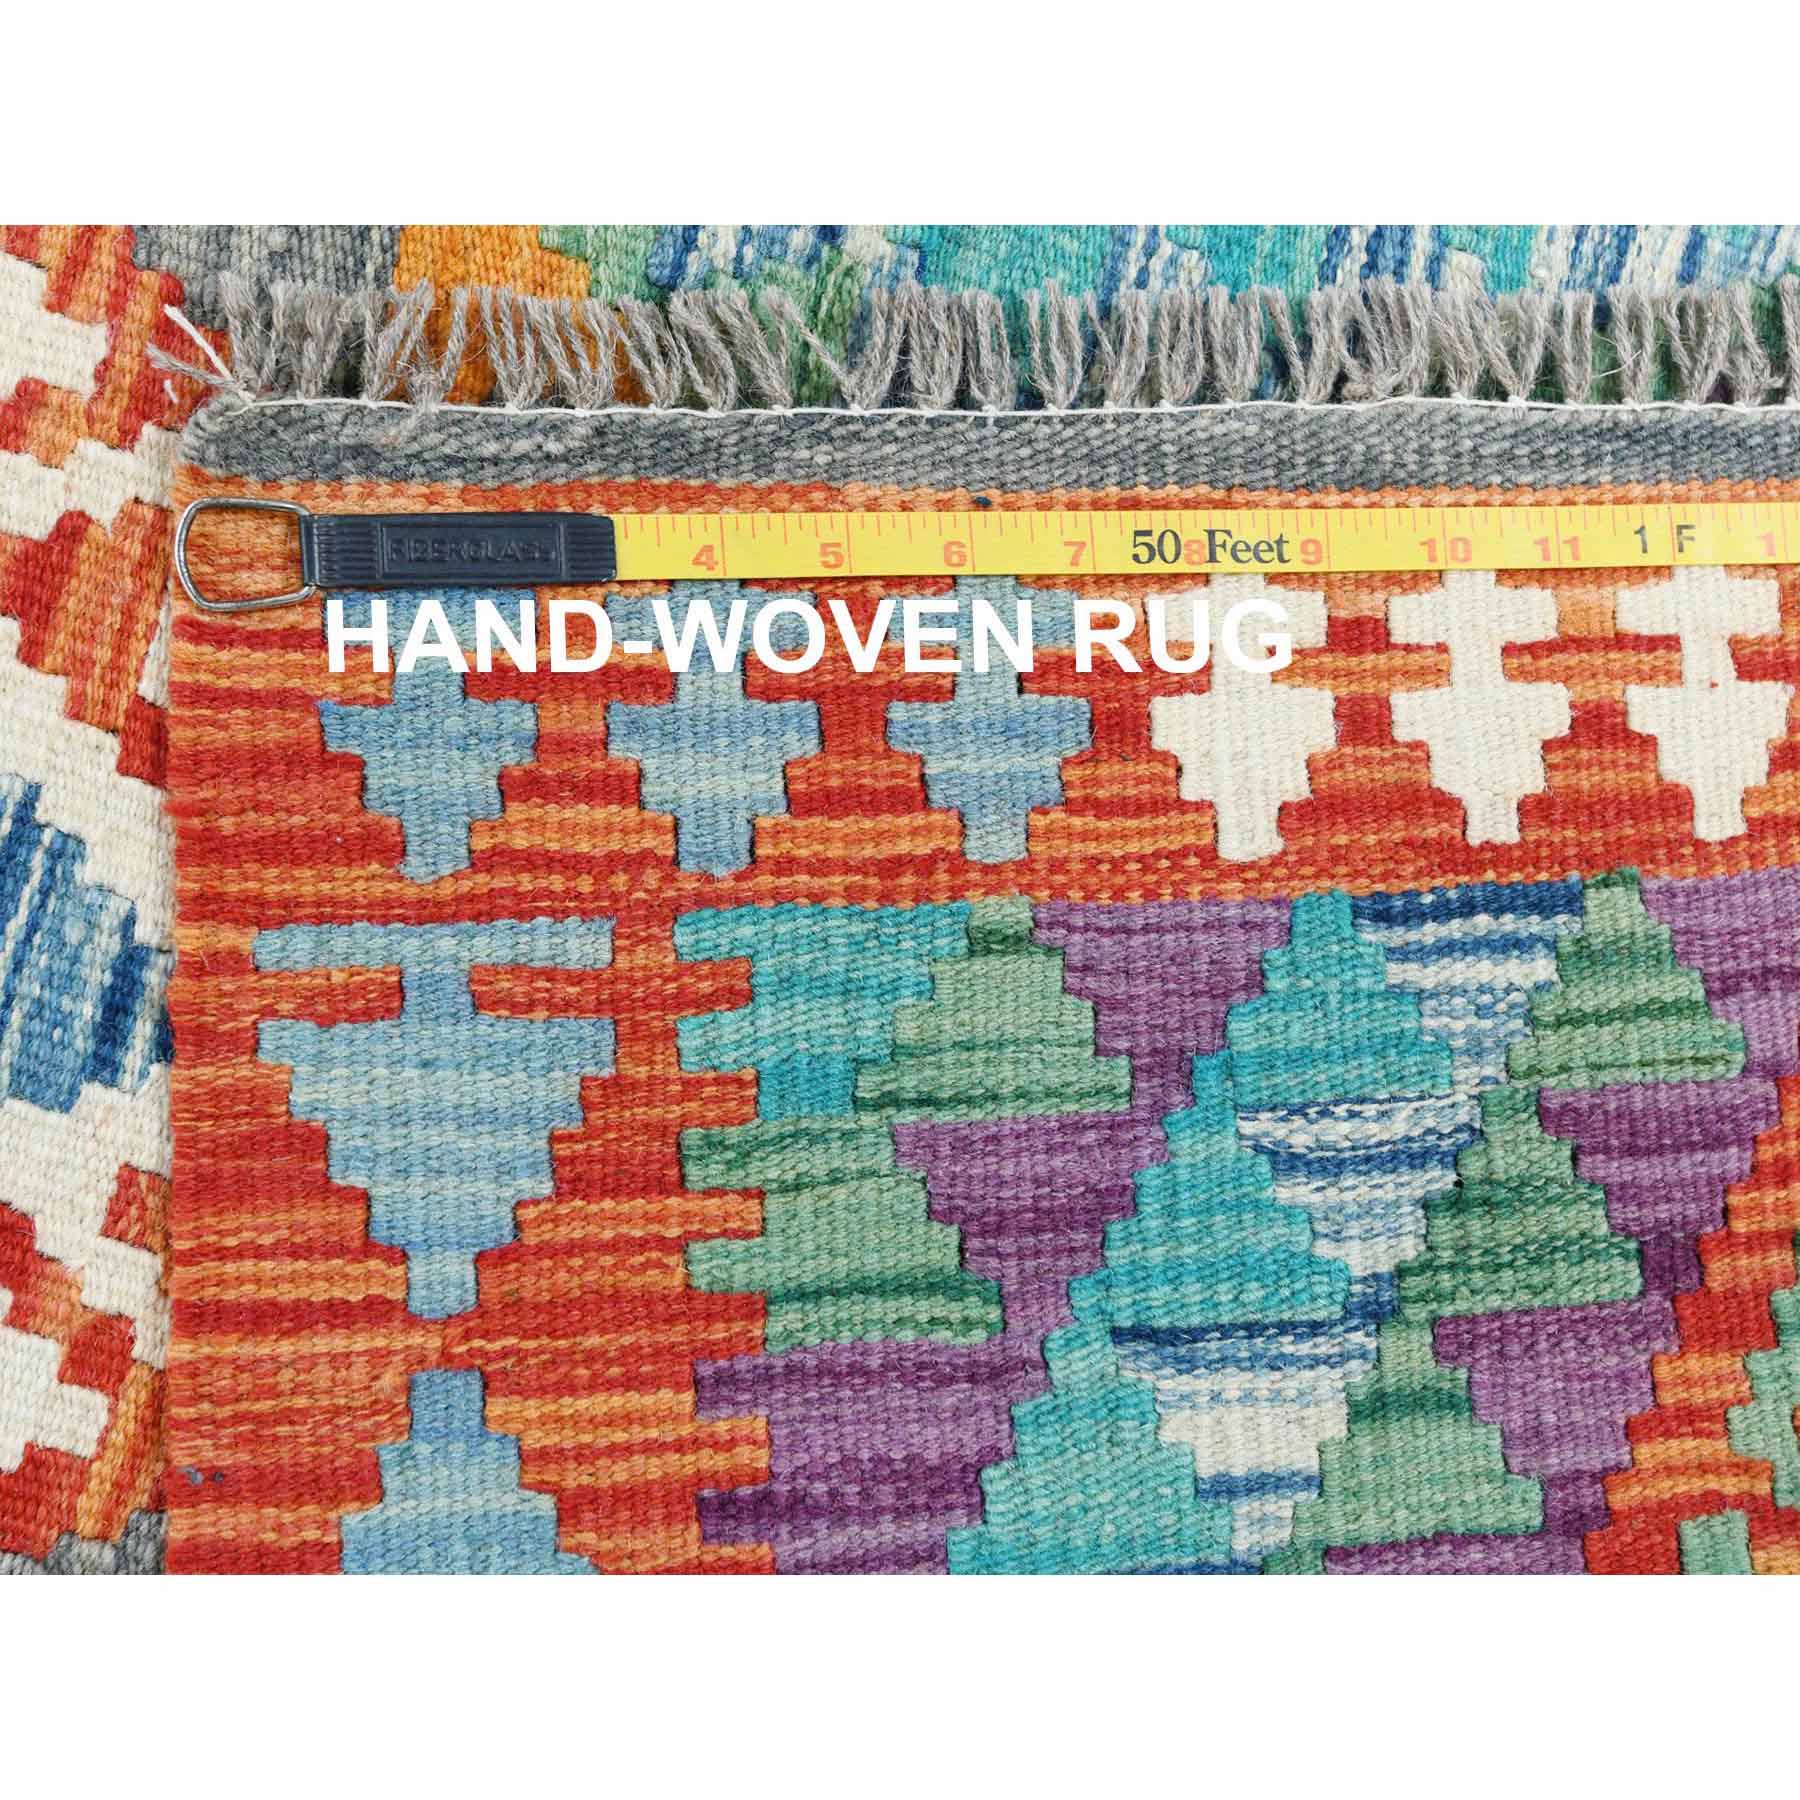 Flat-Weave-Hand-Woven-Rug-407675